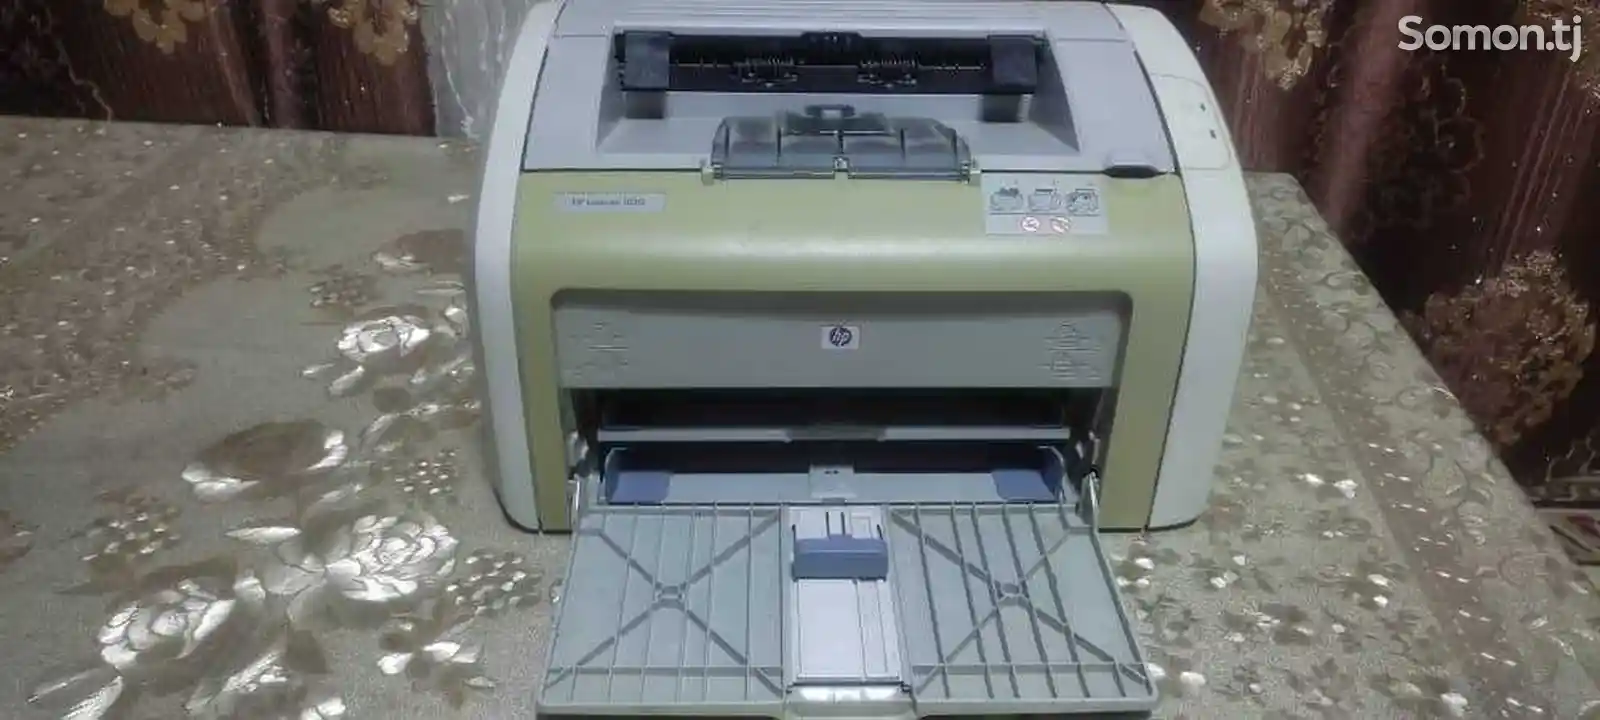 Принтер hp1020-1